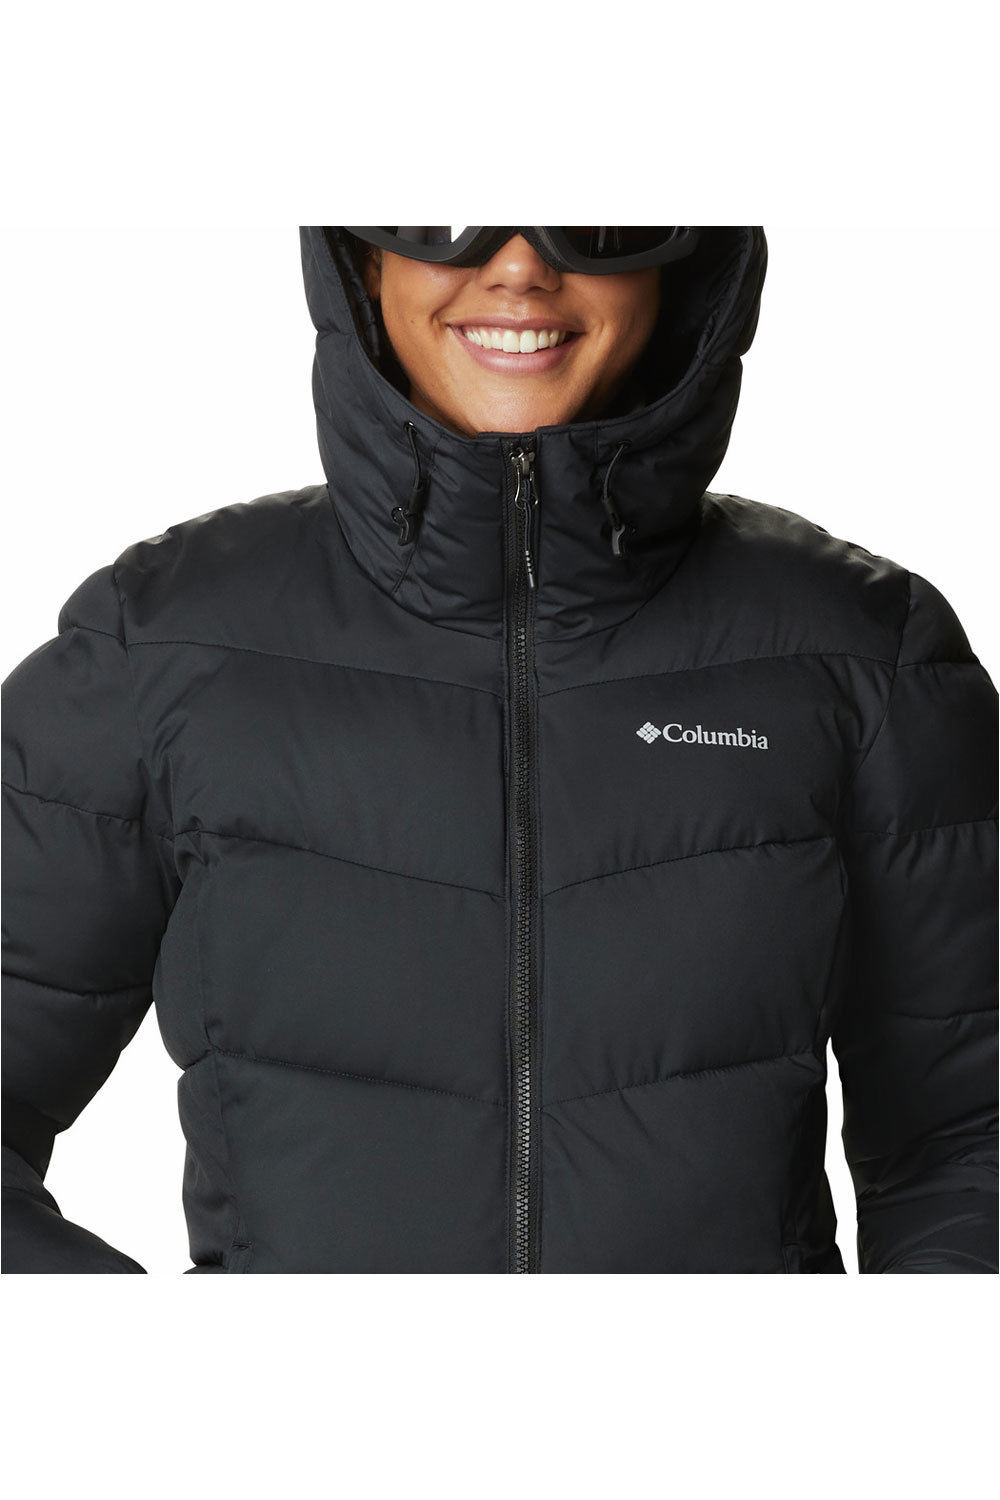 Columbia chaqueta esquí mujer Abbott Peak Insulated Jacket vista detalle